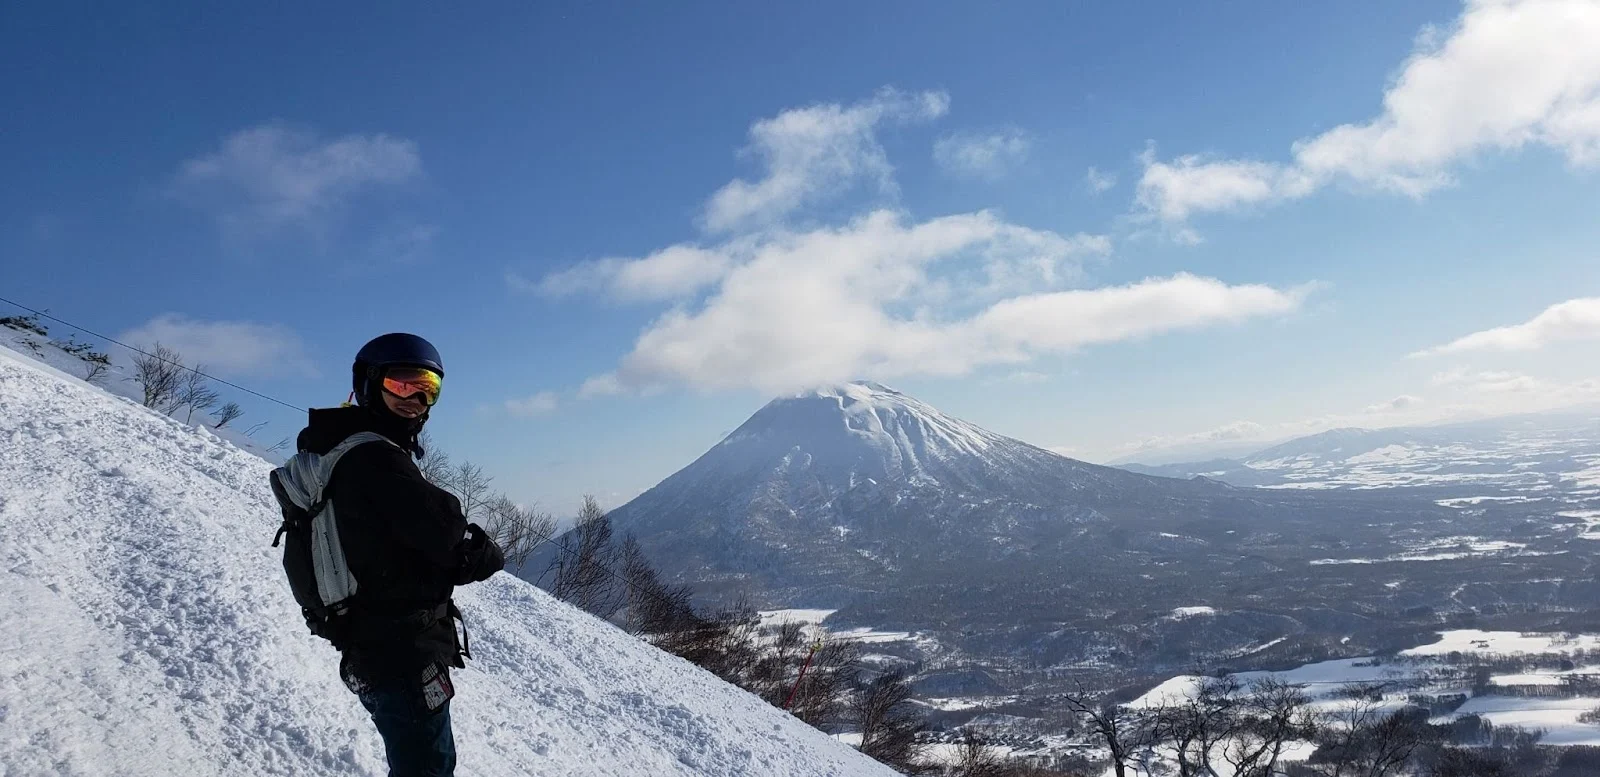 Snowboarding in Hokkaido, Japan